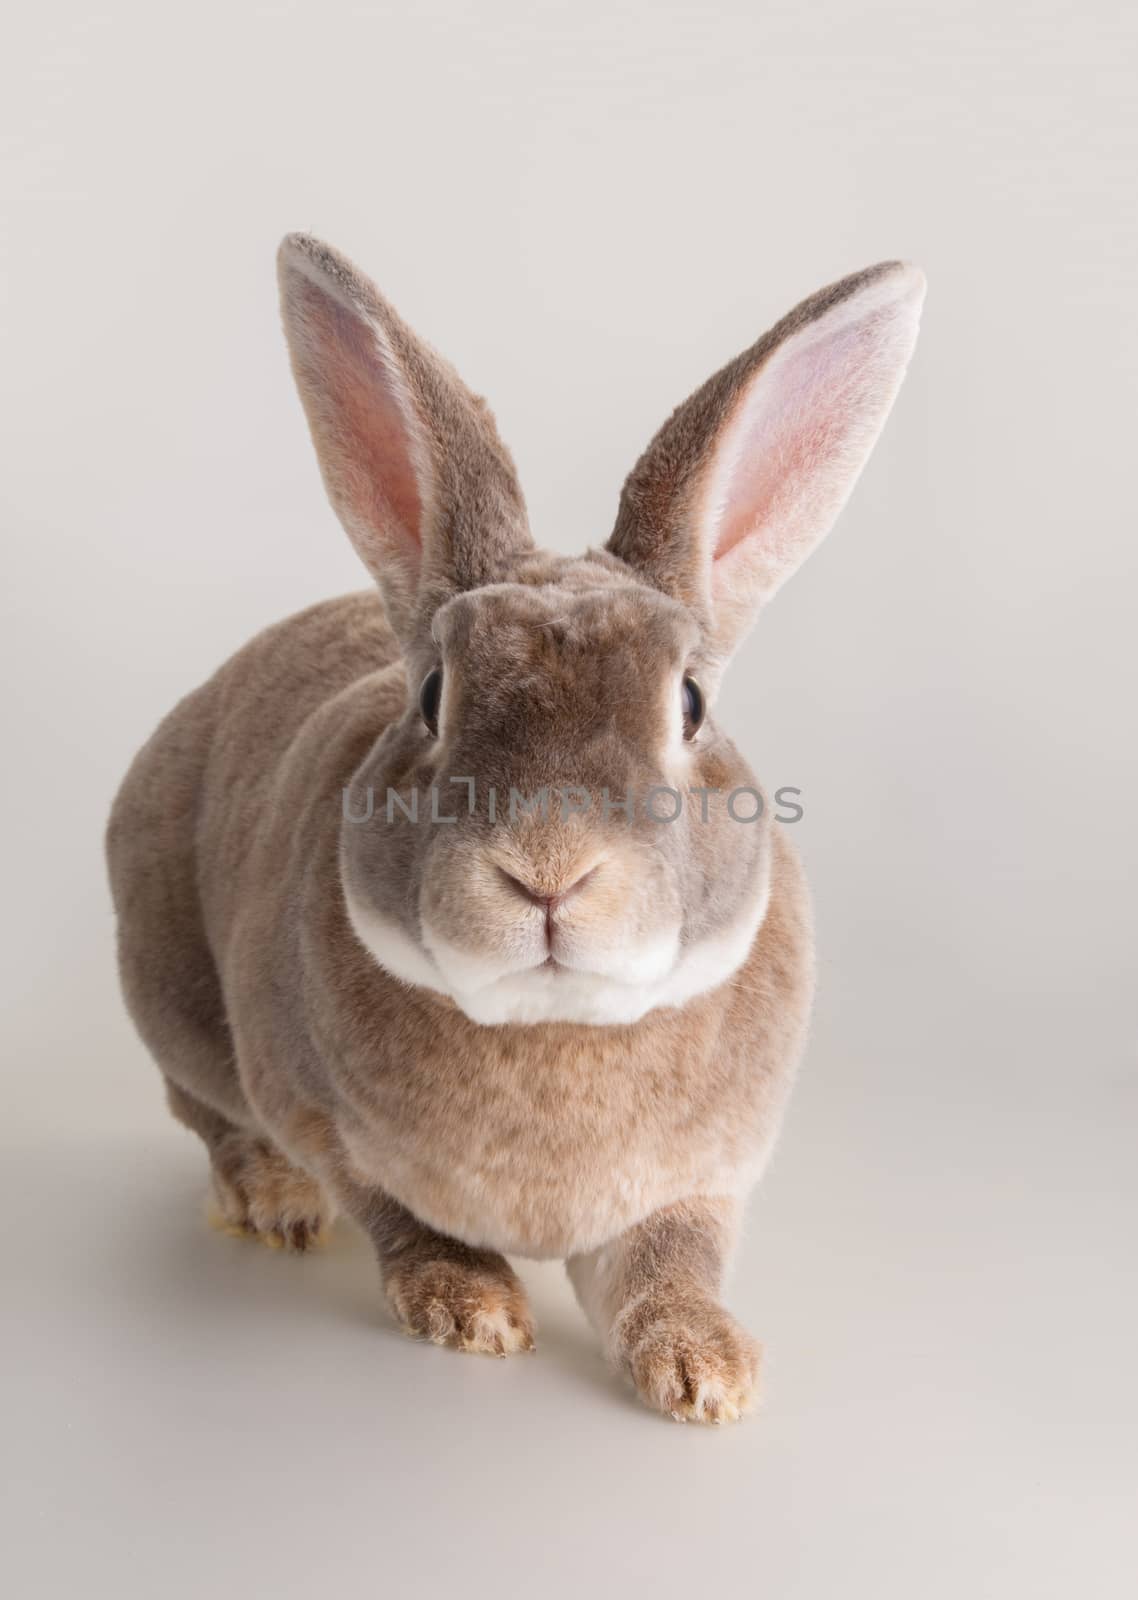 Portrait of a cute domestic rabbit by lanalanglois